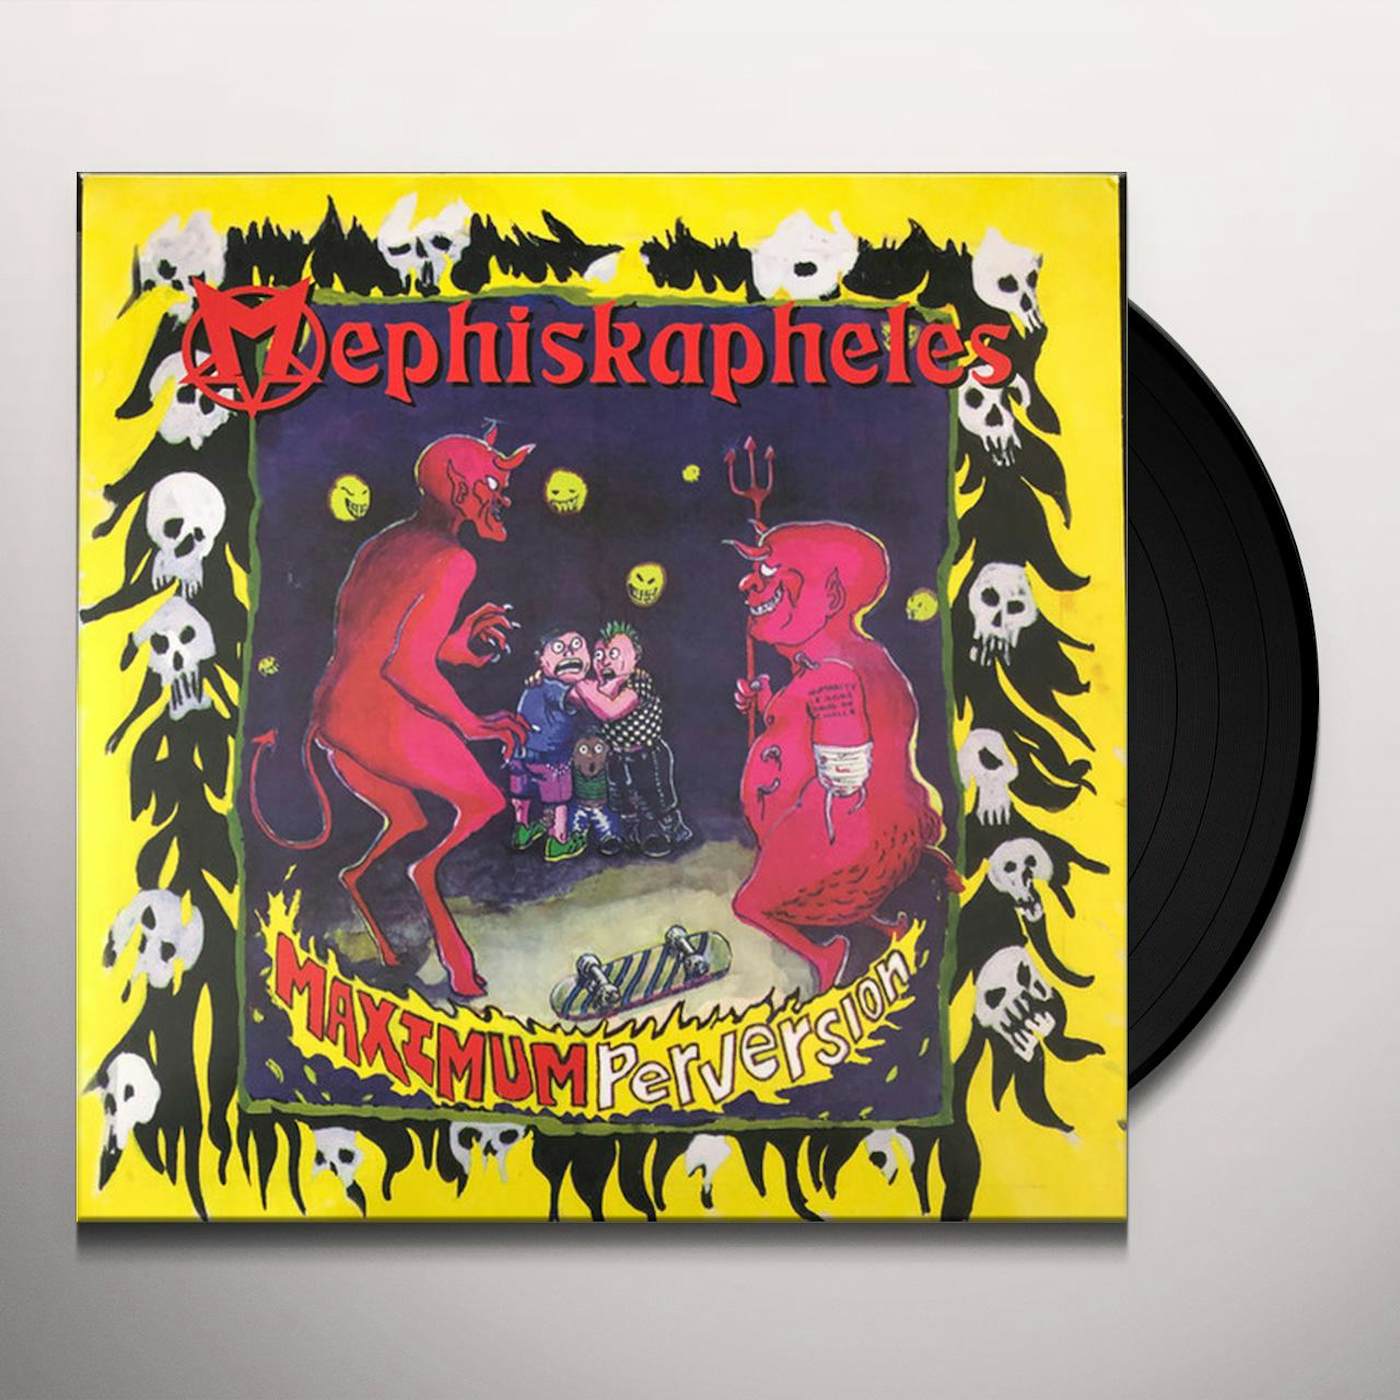 Mephiskapheles Maximum Perversion Vinyl Record